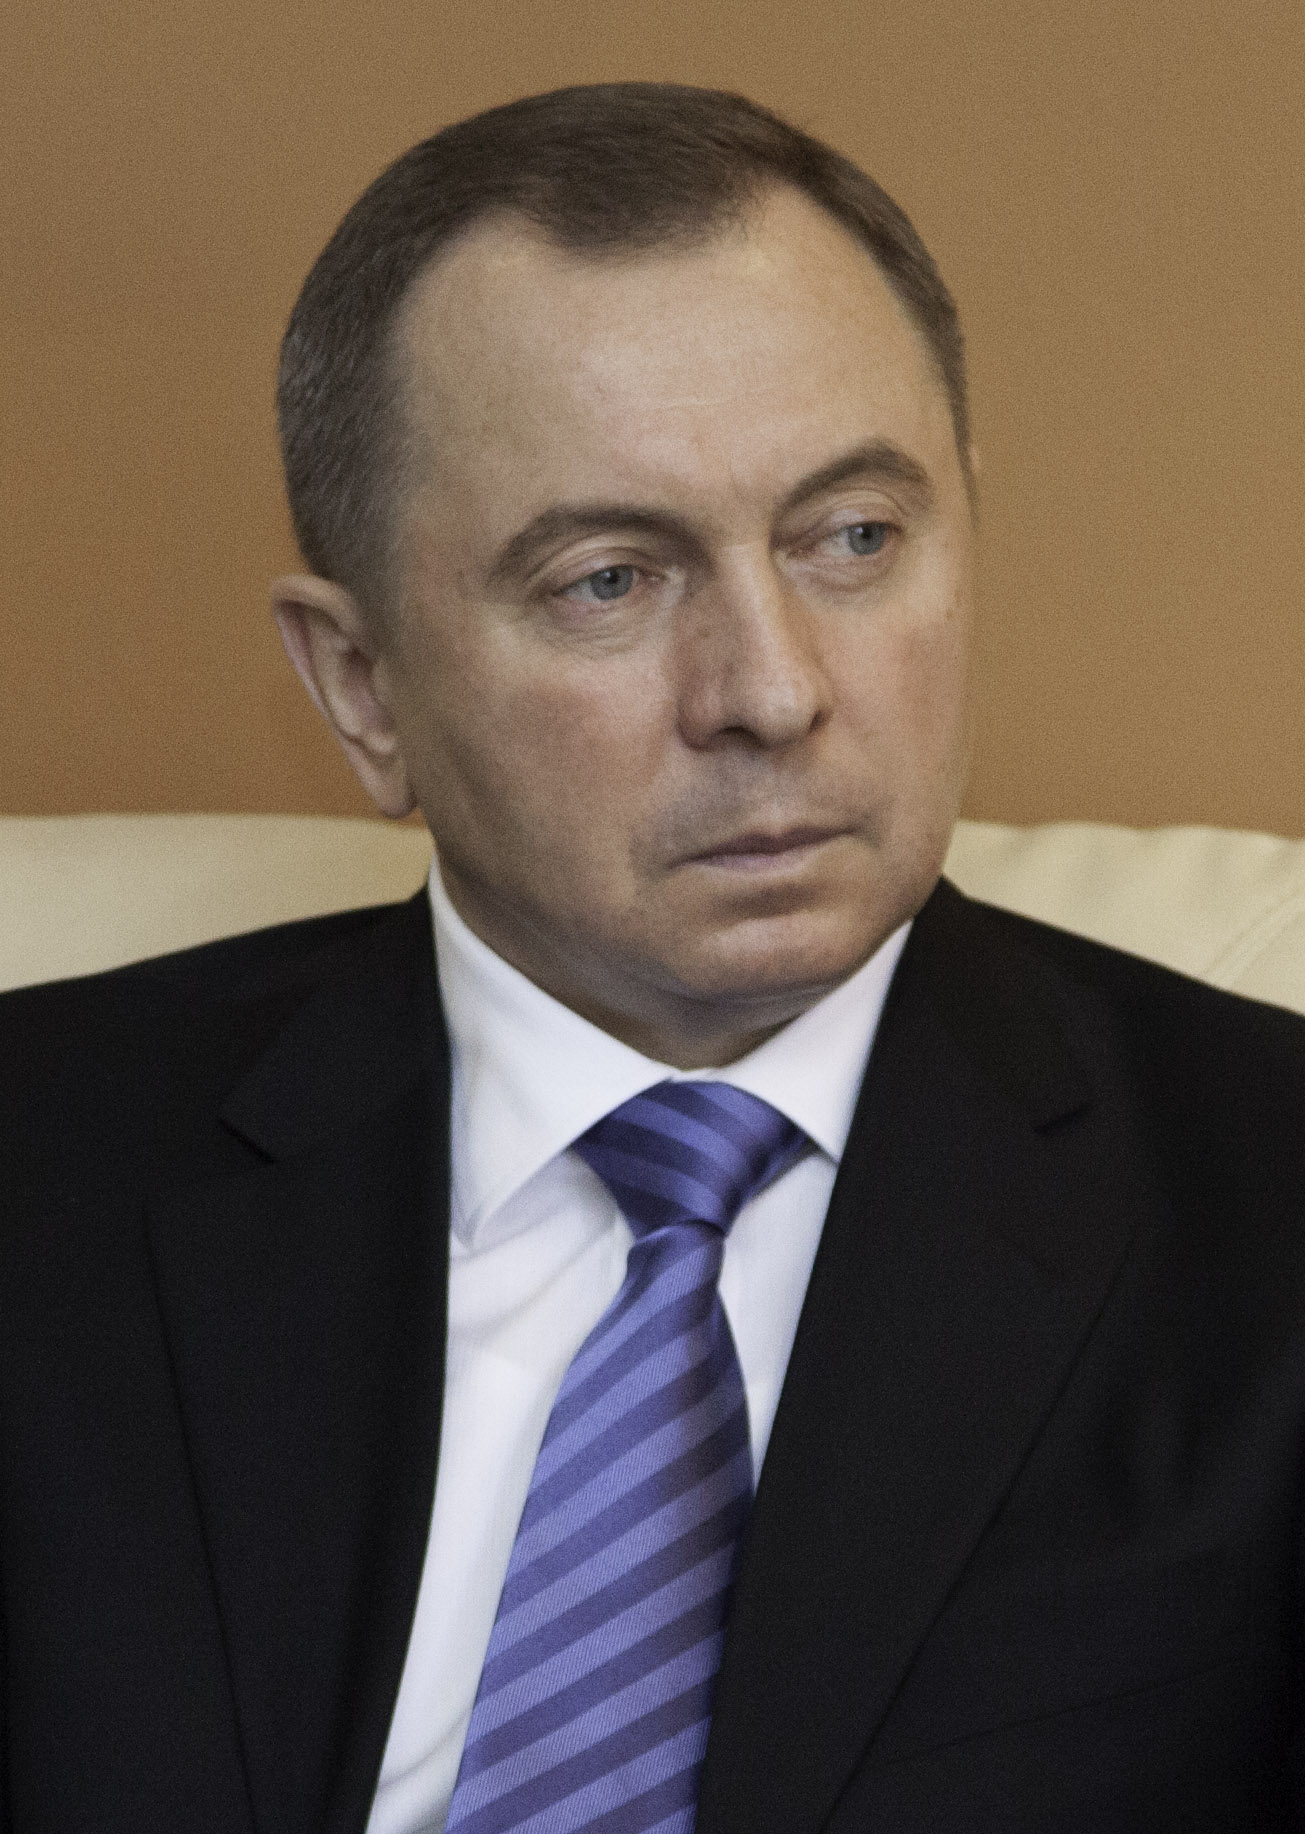 Belarus foreign minister Makei dies - Belta